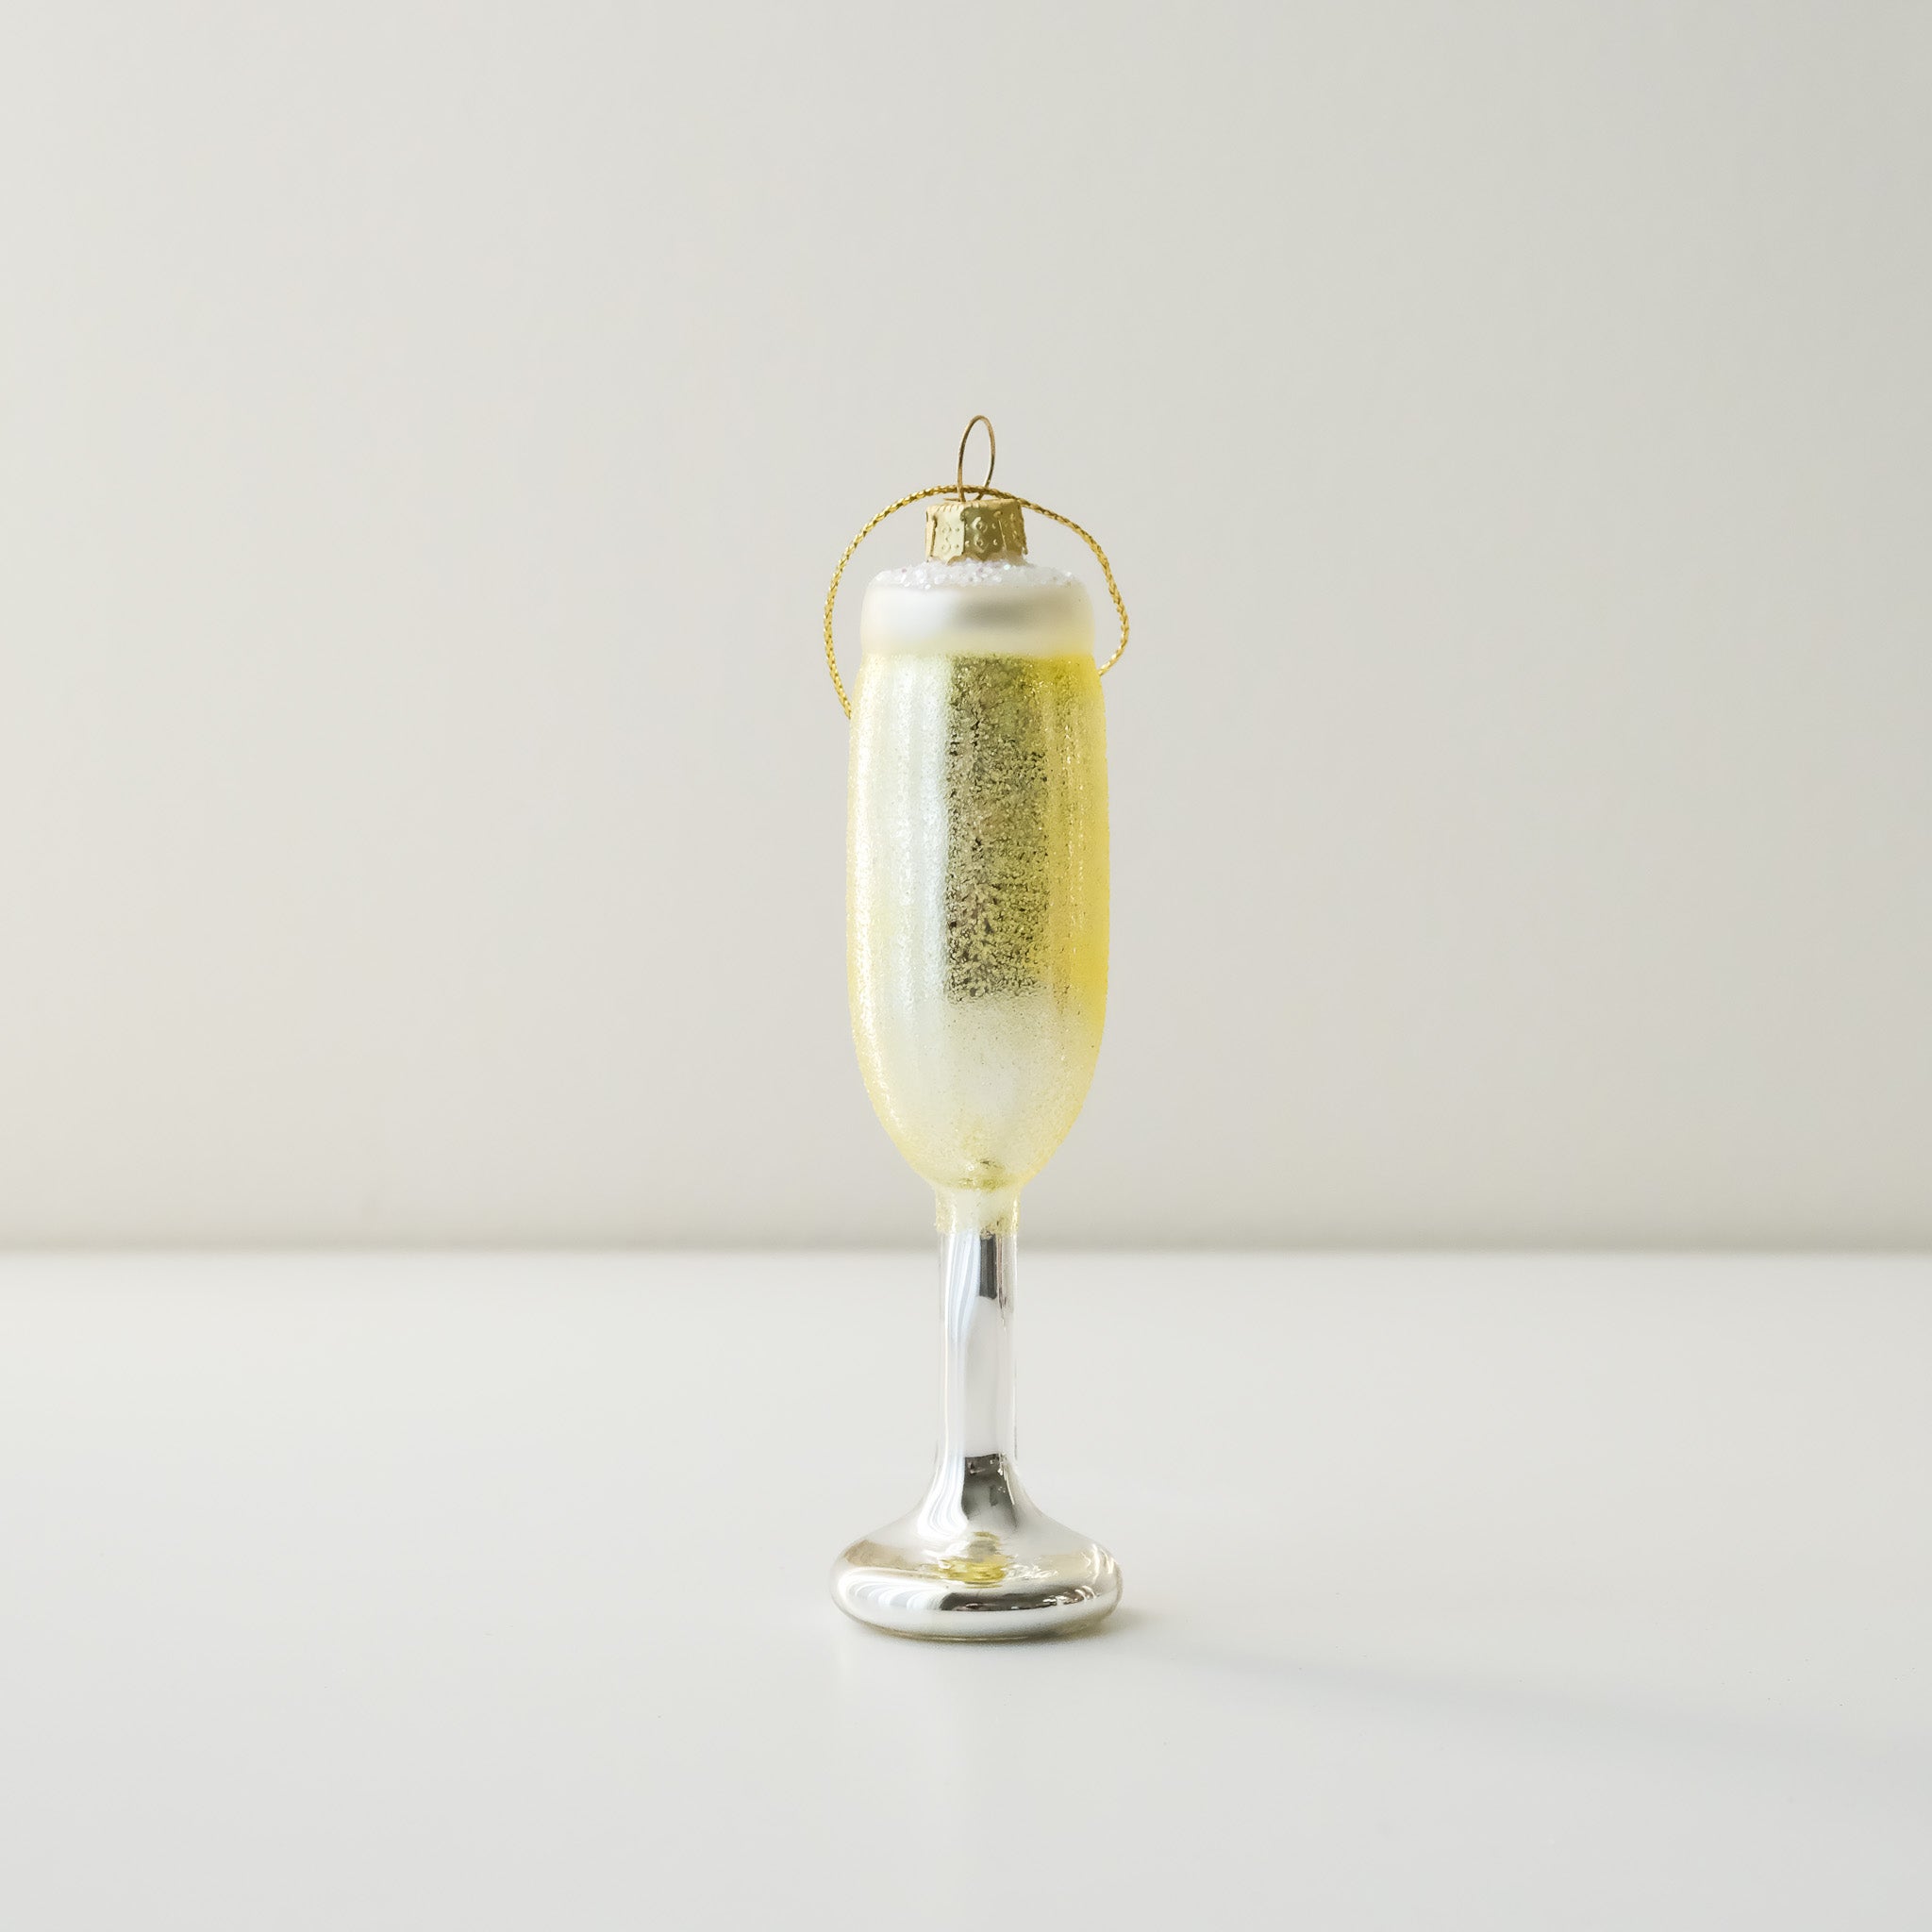 Vintage Heirloom Ornament - Champagne Flute